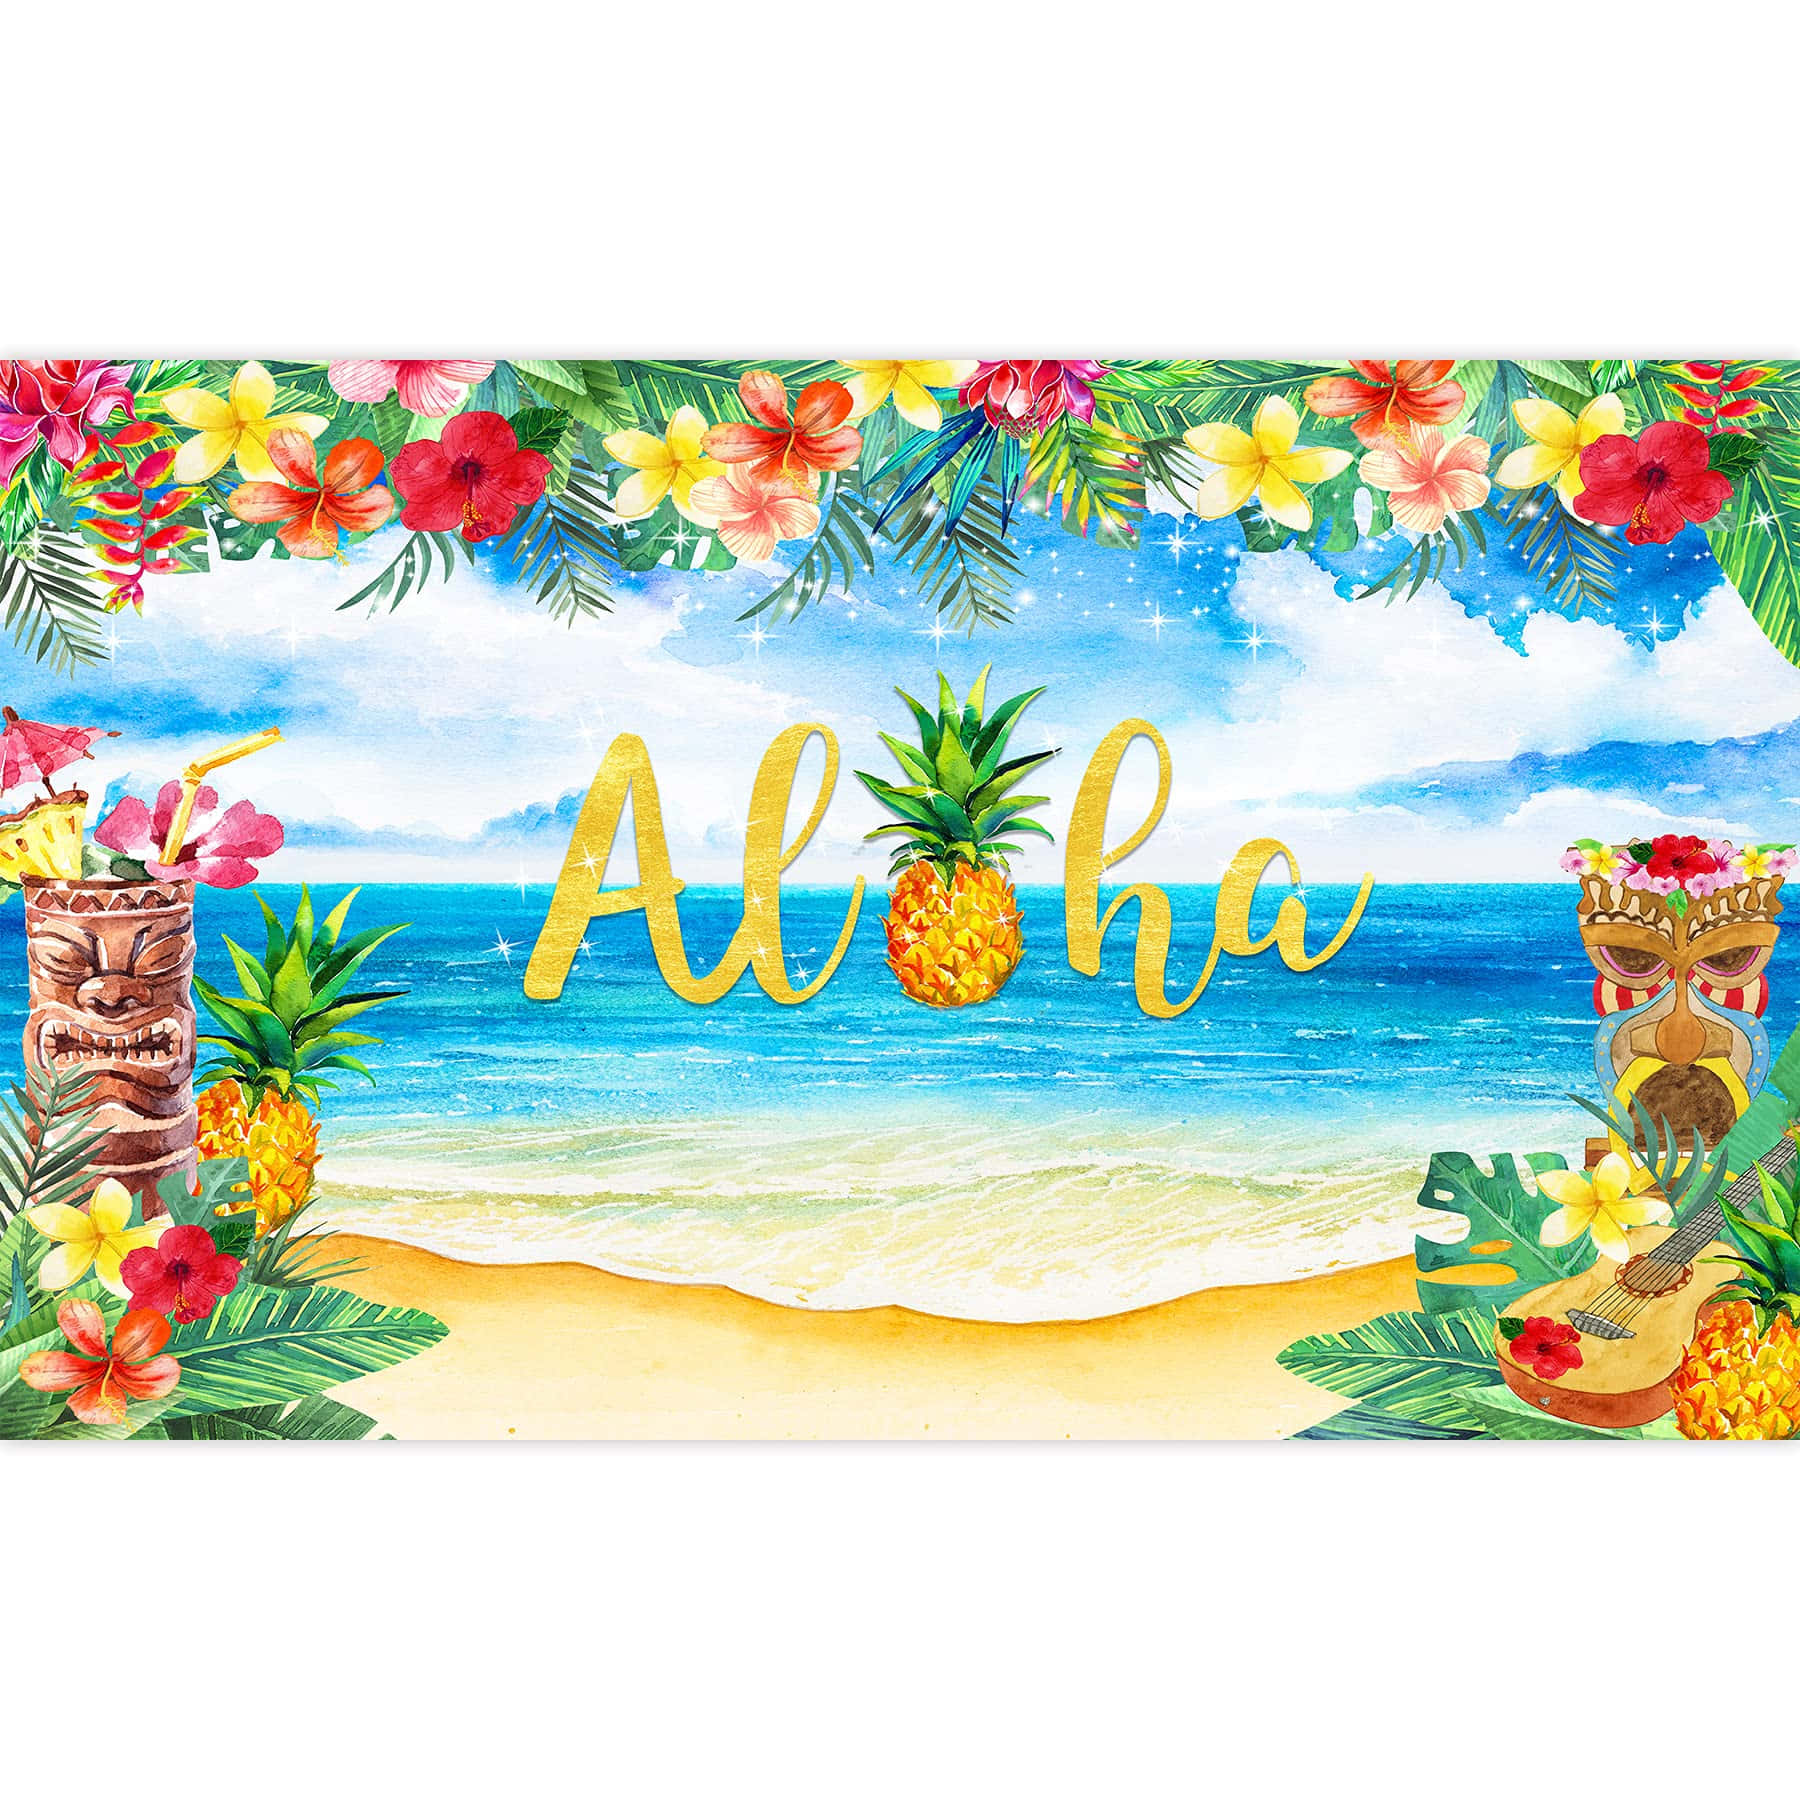 Enjoy a beautiful Hawaiian Luau with friends and family